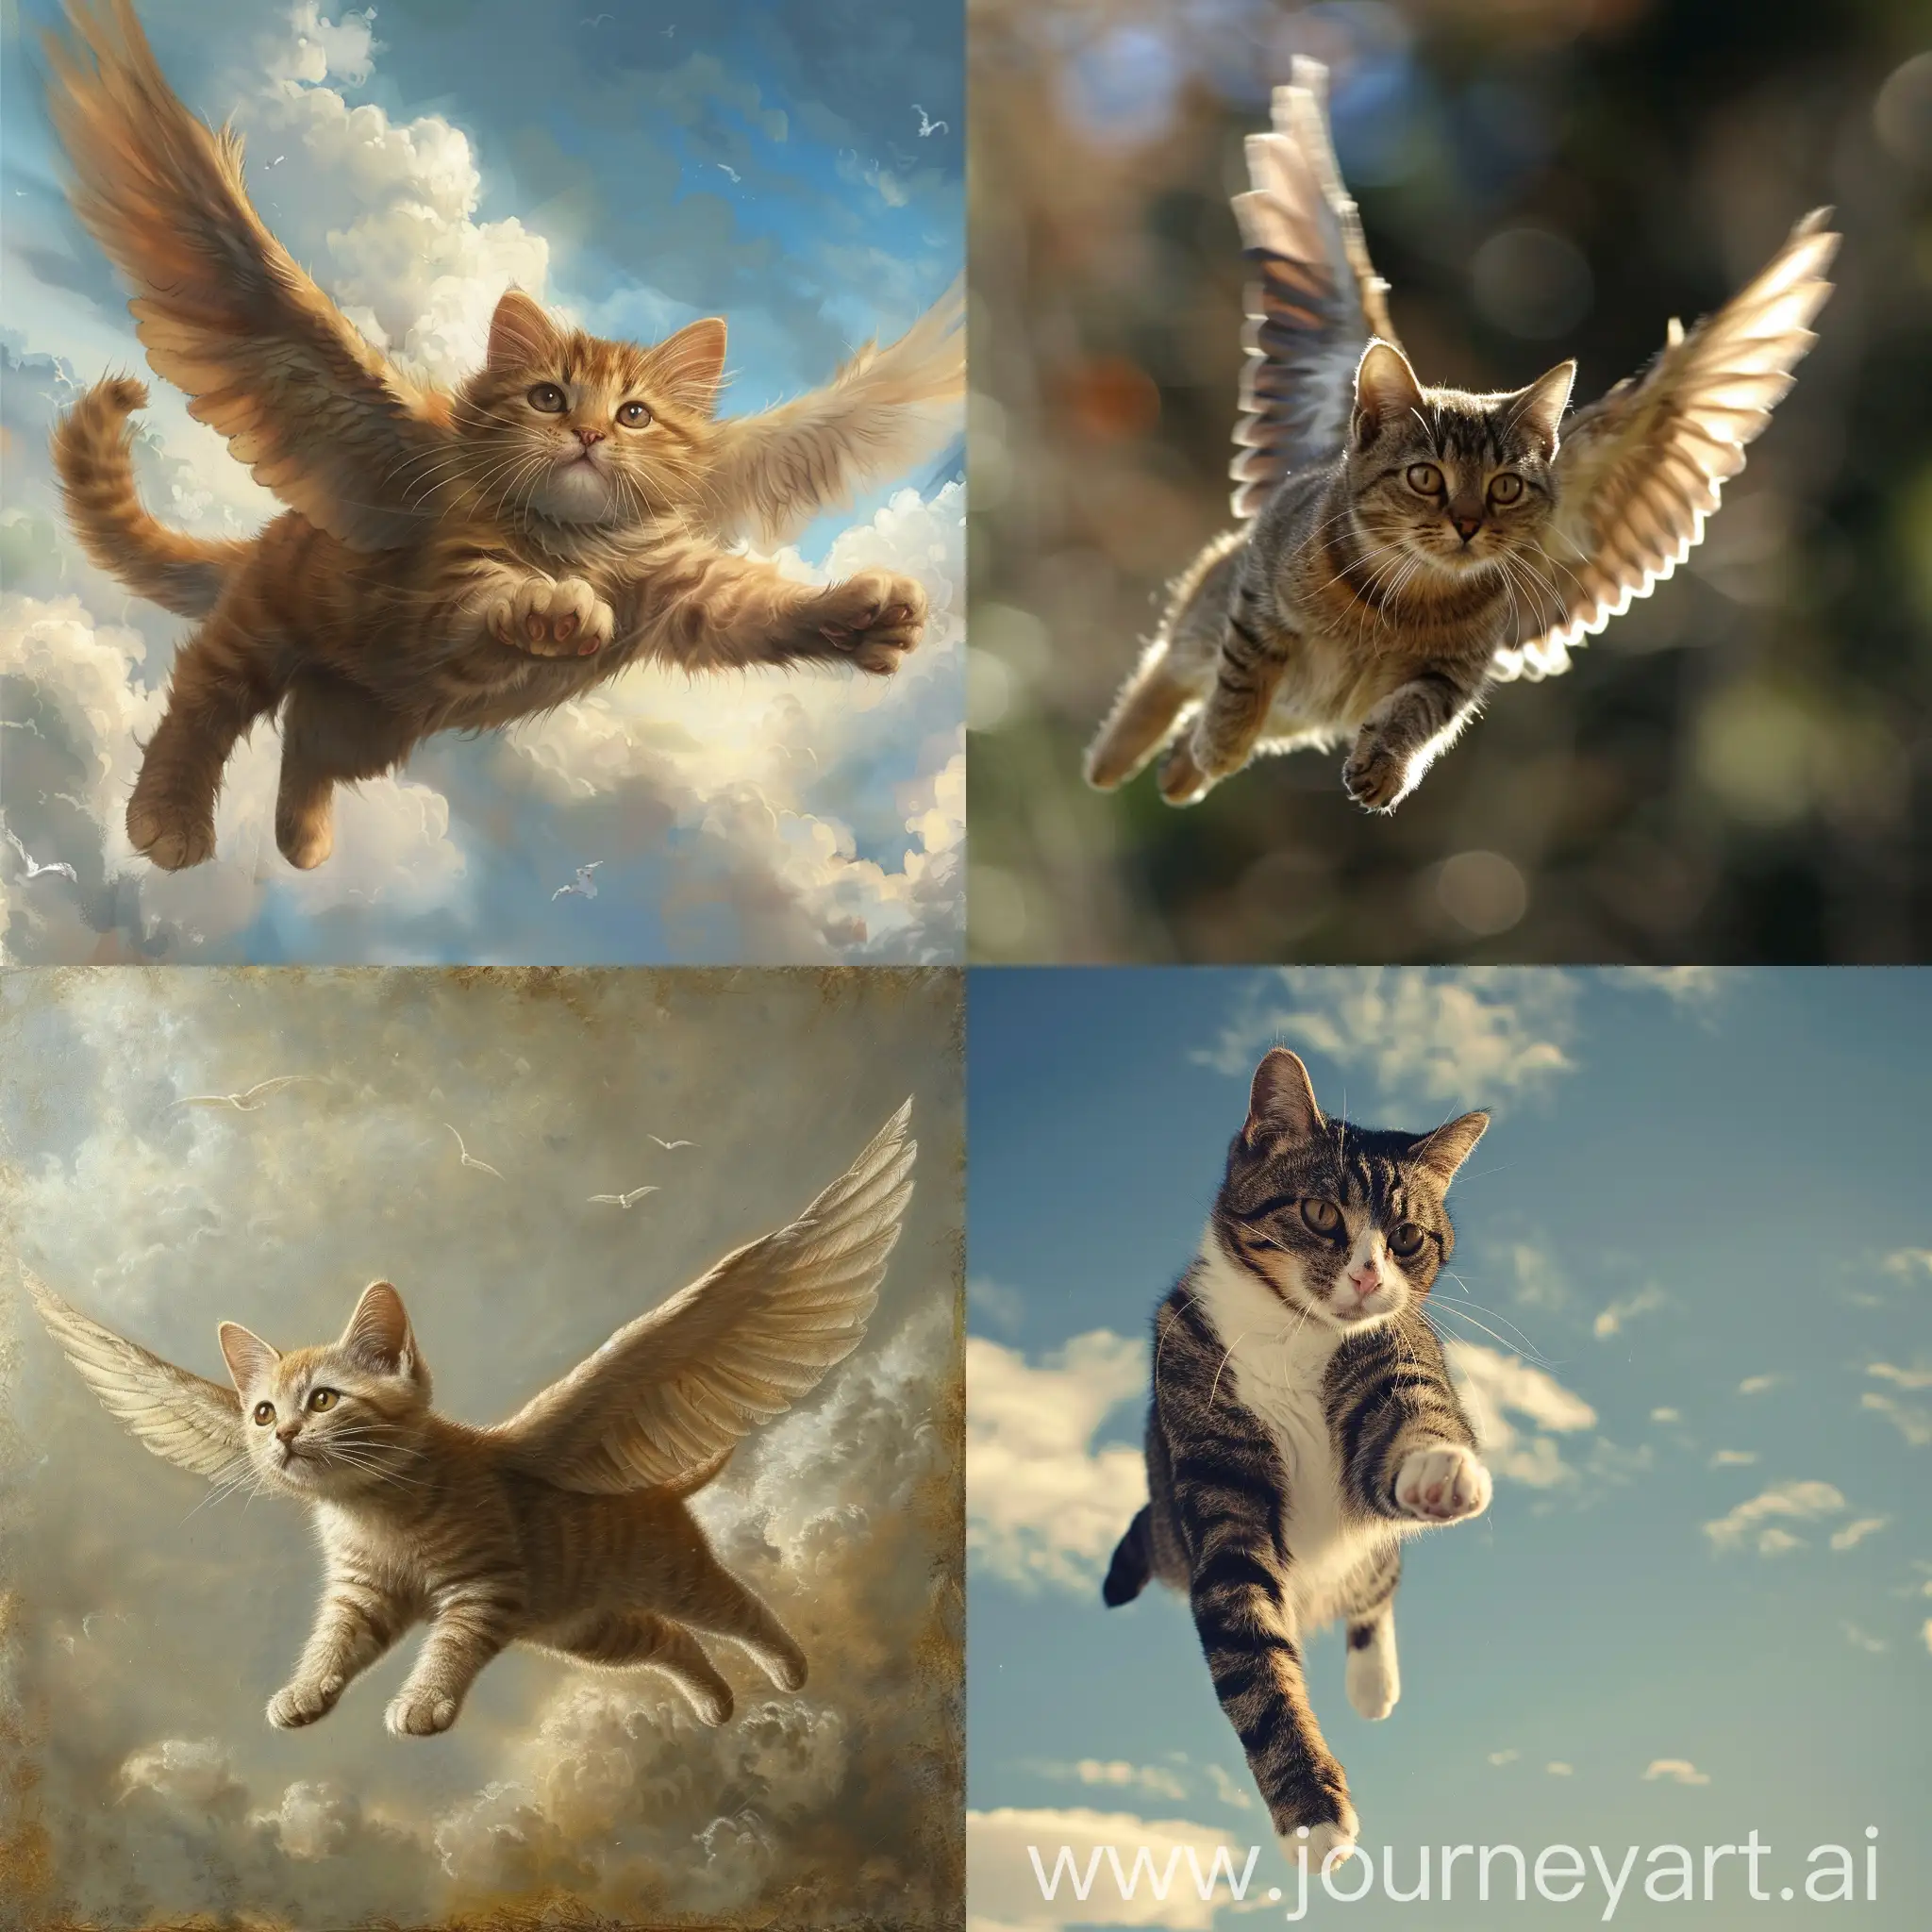 Graceful-Flying-Cat-in-a-Surreal-Landscape